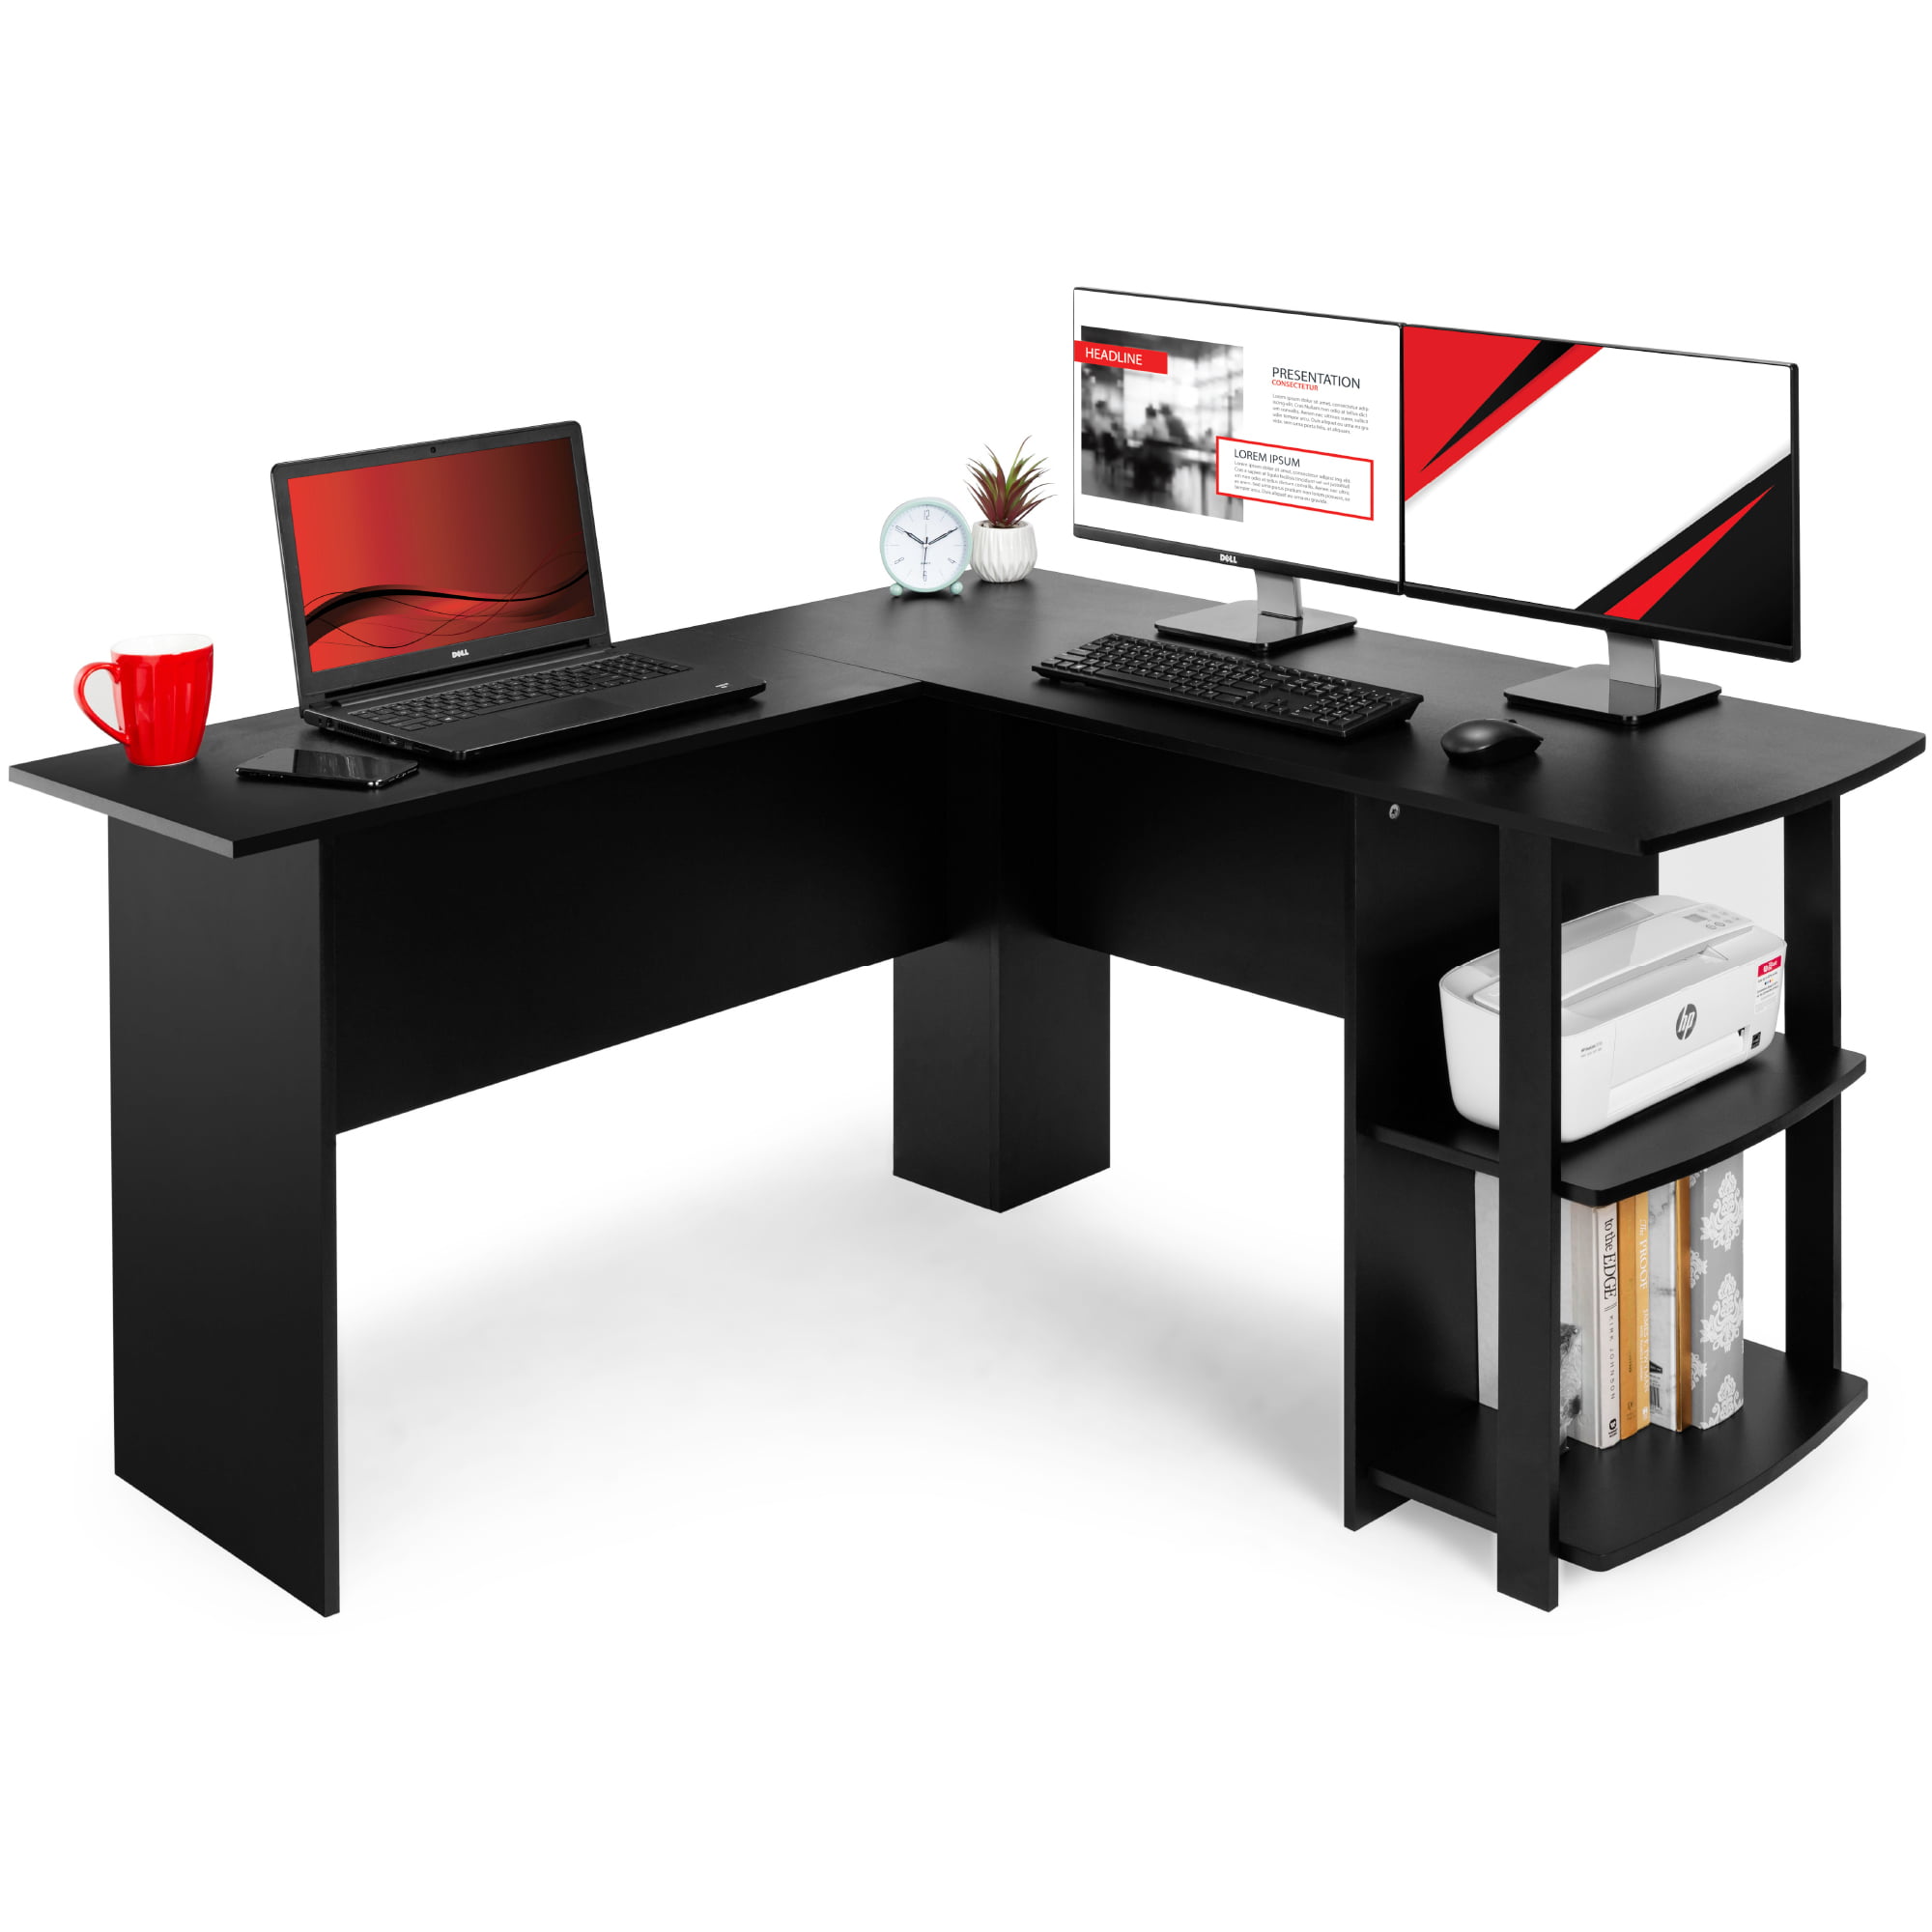 Details about   L-Shaped Computer Desk PC Laptop Table Corner Workstation Home Office Furniture